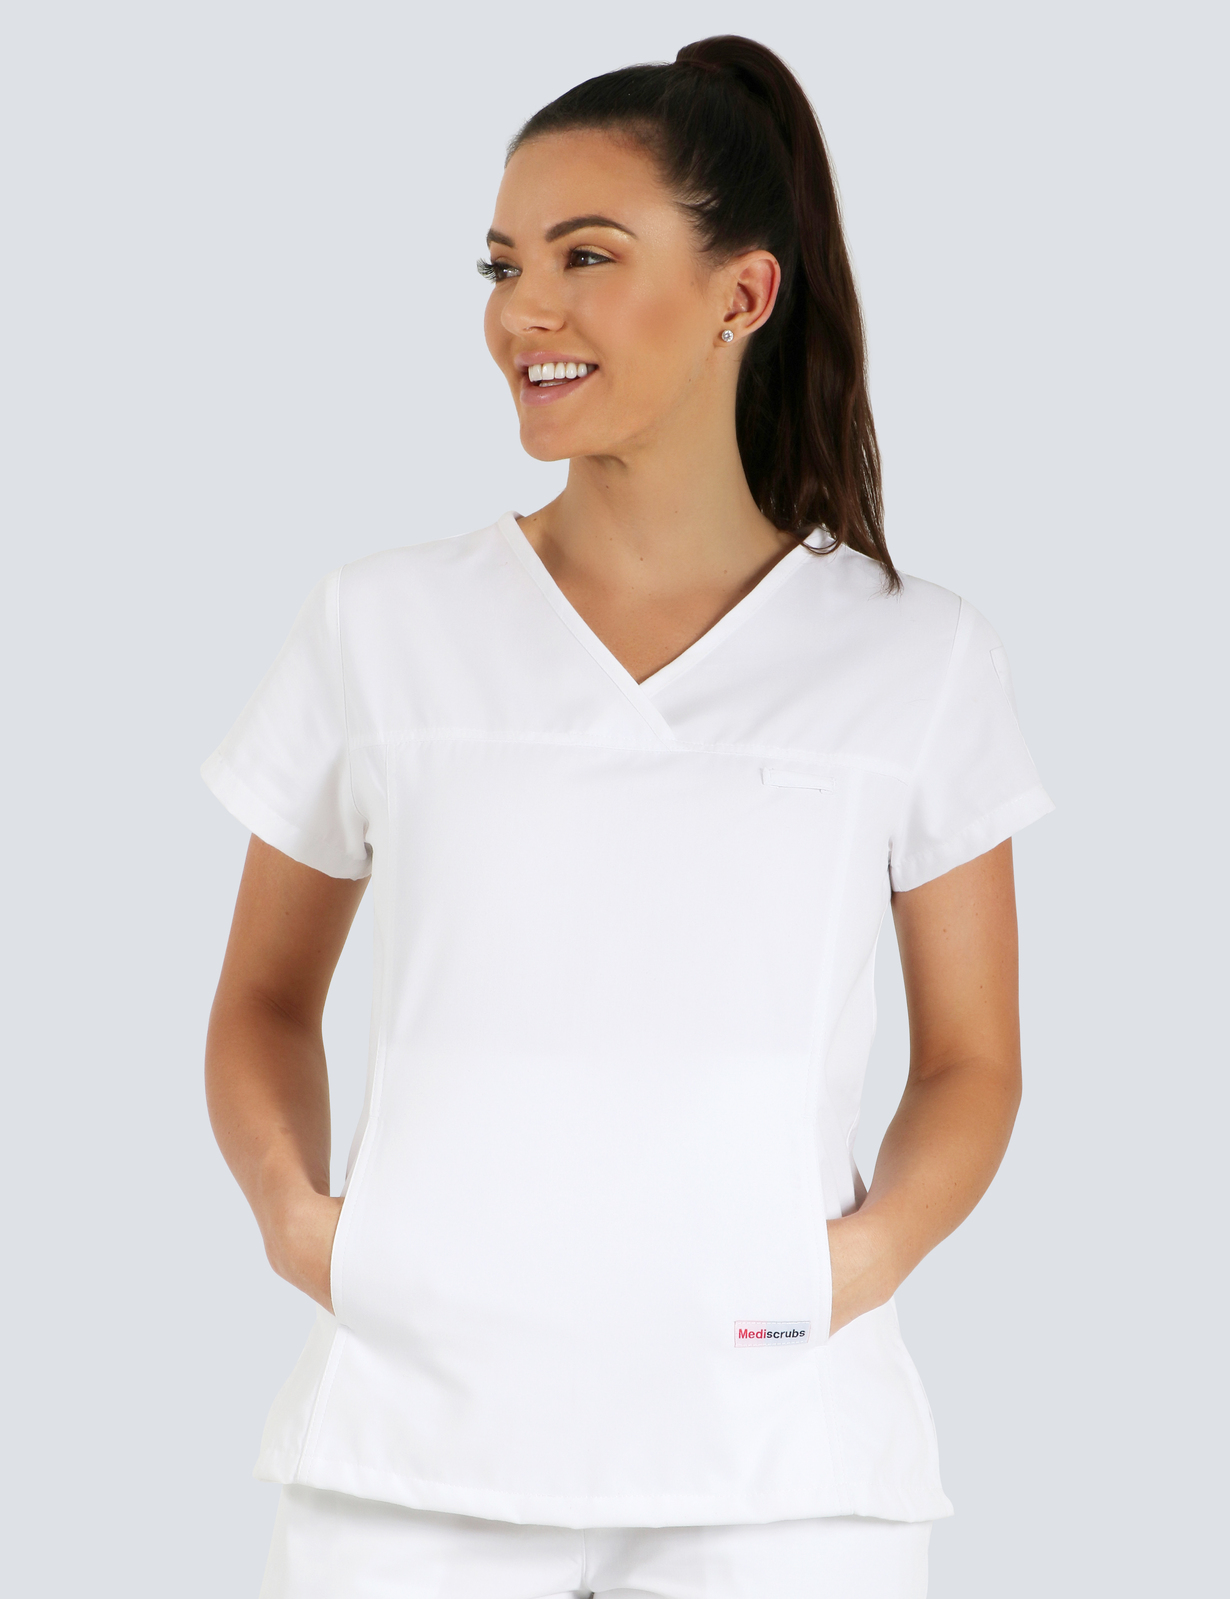 Queensland Children's Hospital Emergency Department Registered  Nurse  Uniform Top Bundle  (Women's Fit Top in White incl Logos)